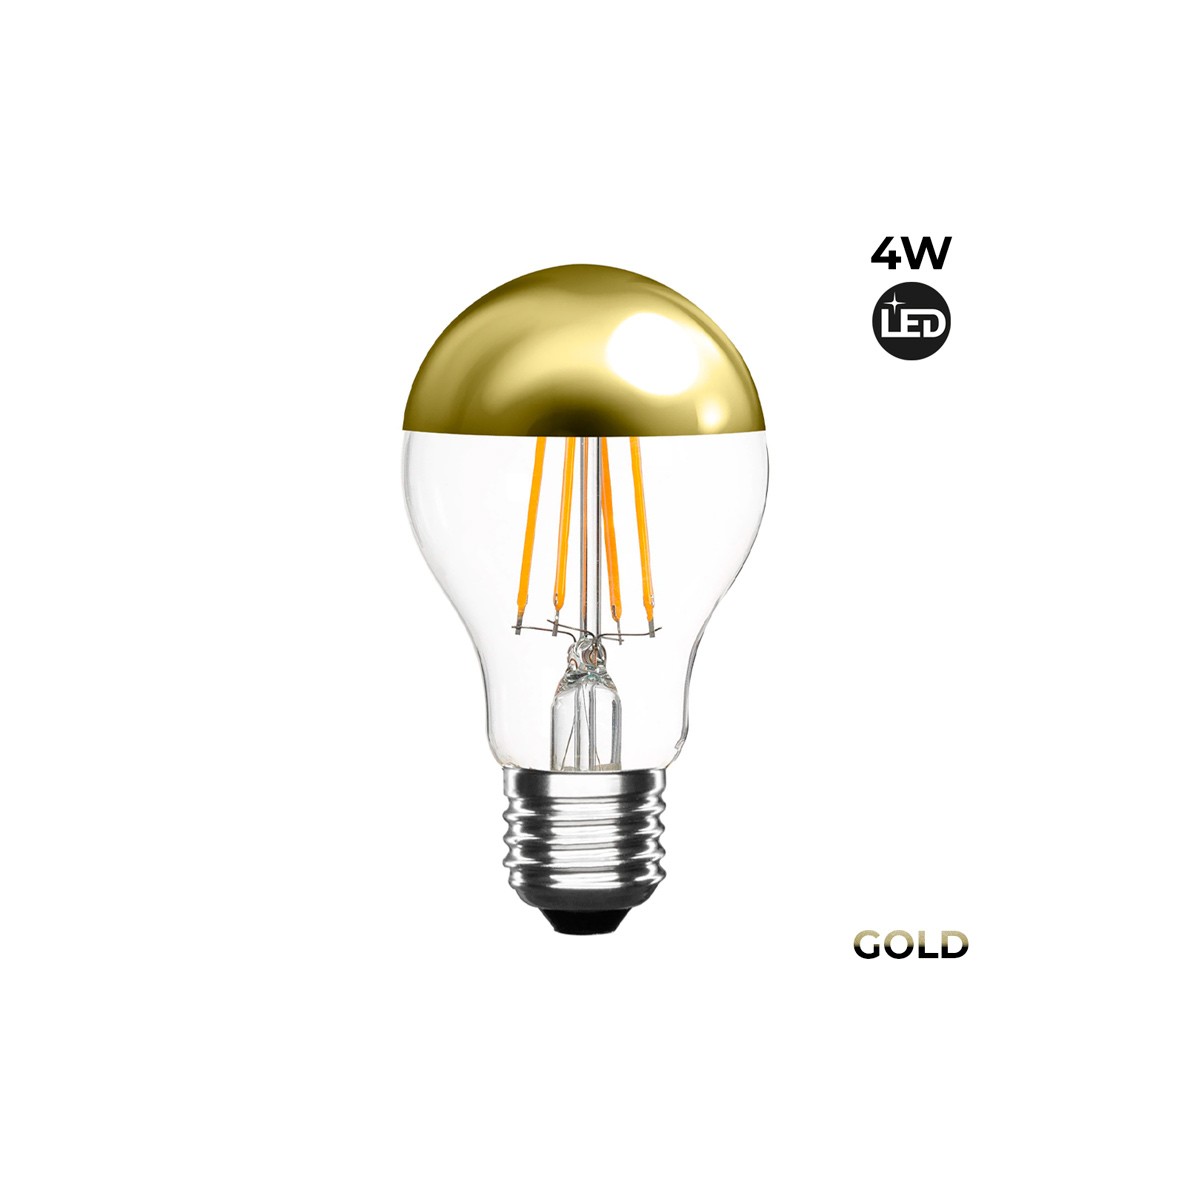 LED-Kopfspiegellampe E27 Gold 4W